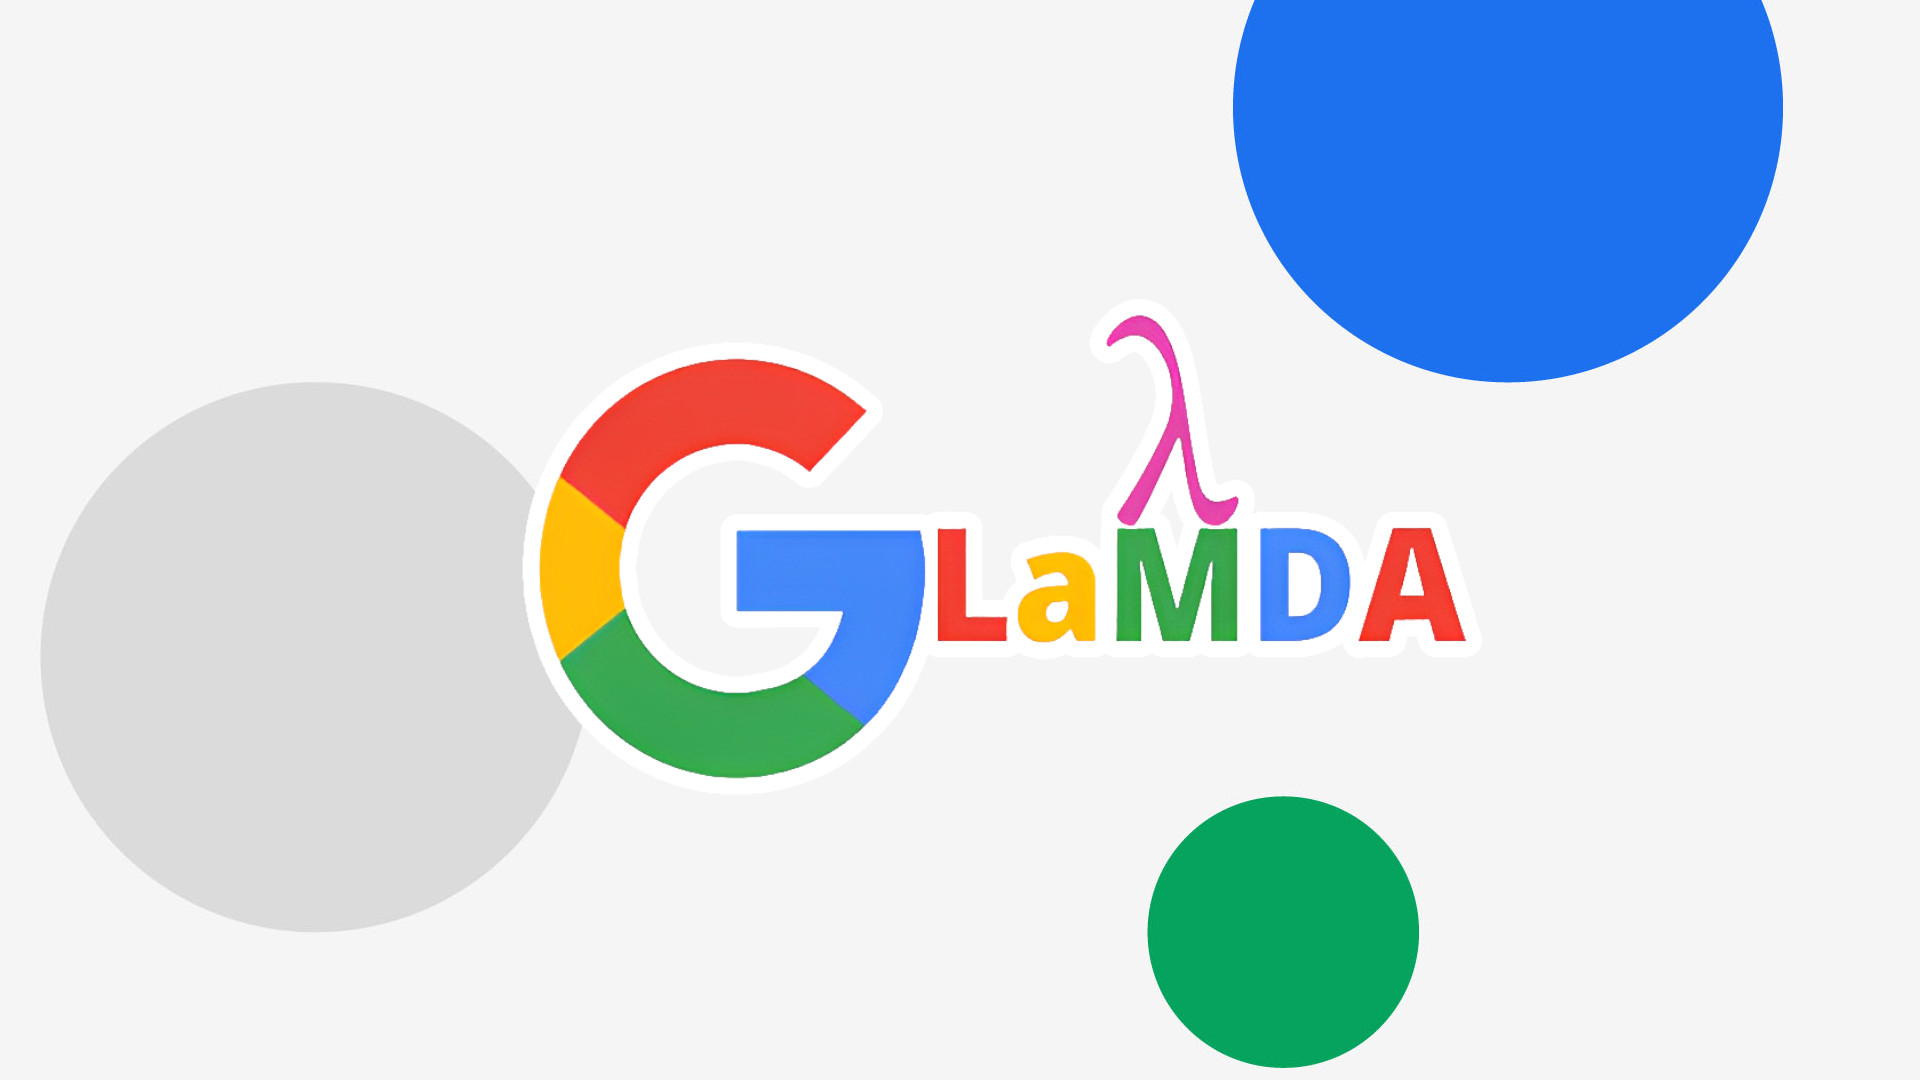 Google LaMDA logo on polka dot background